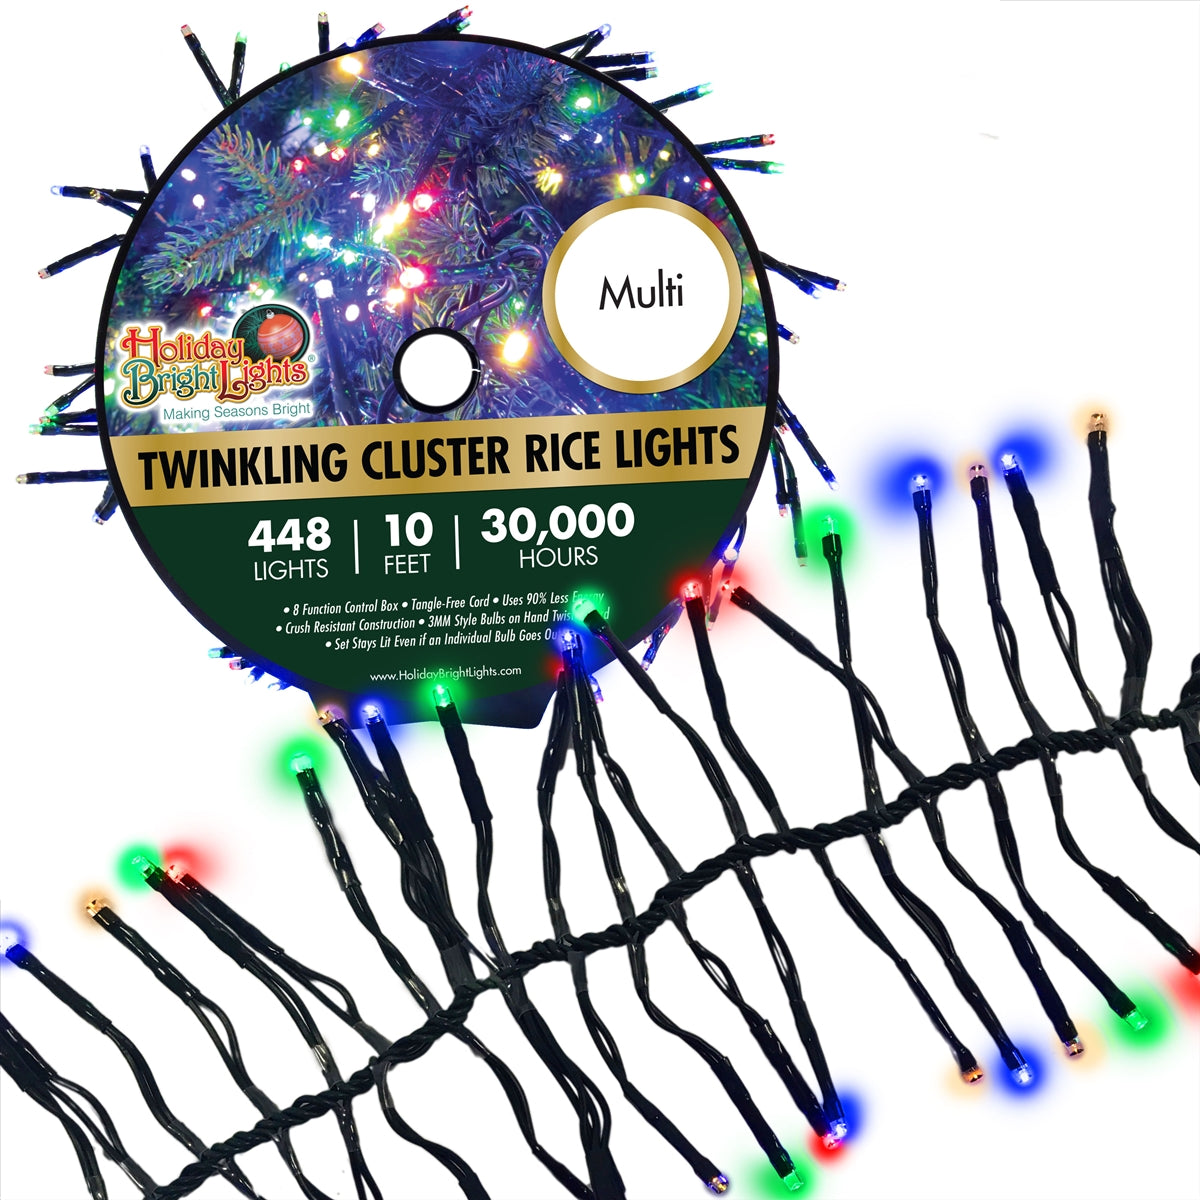 Holiday Bright LED-3MCR448-GMU Twinkling Cluster Rice 448 Multi Light Set, 10'